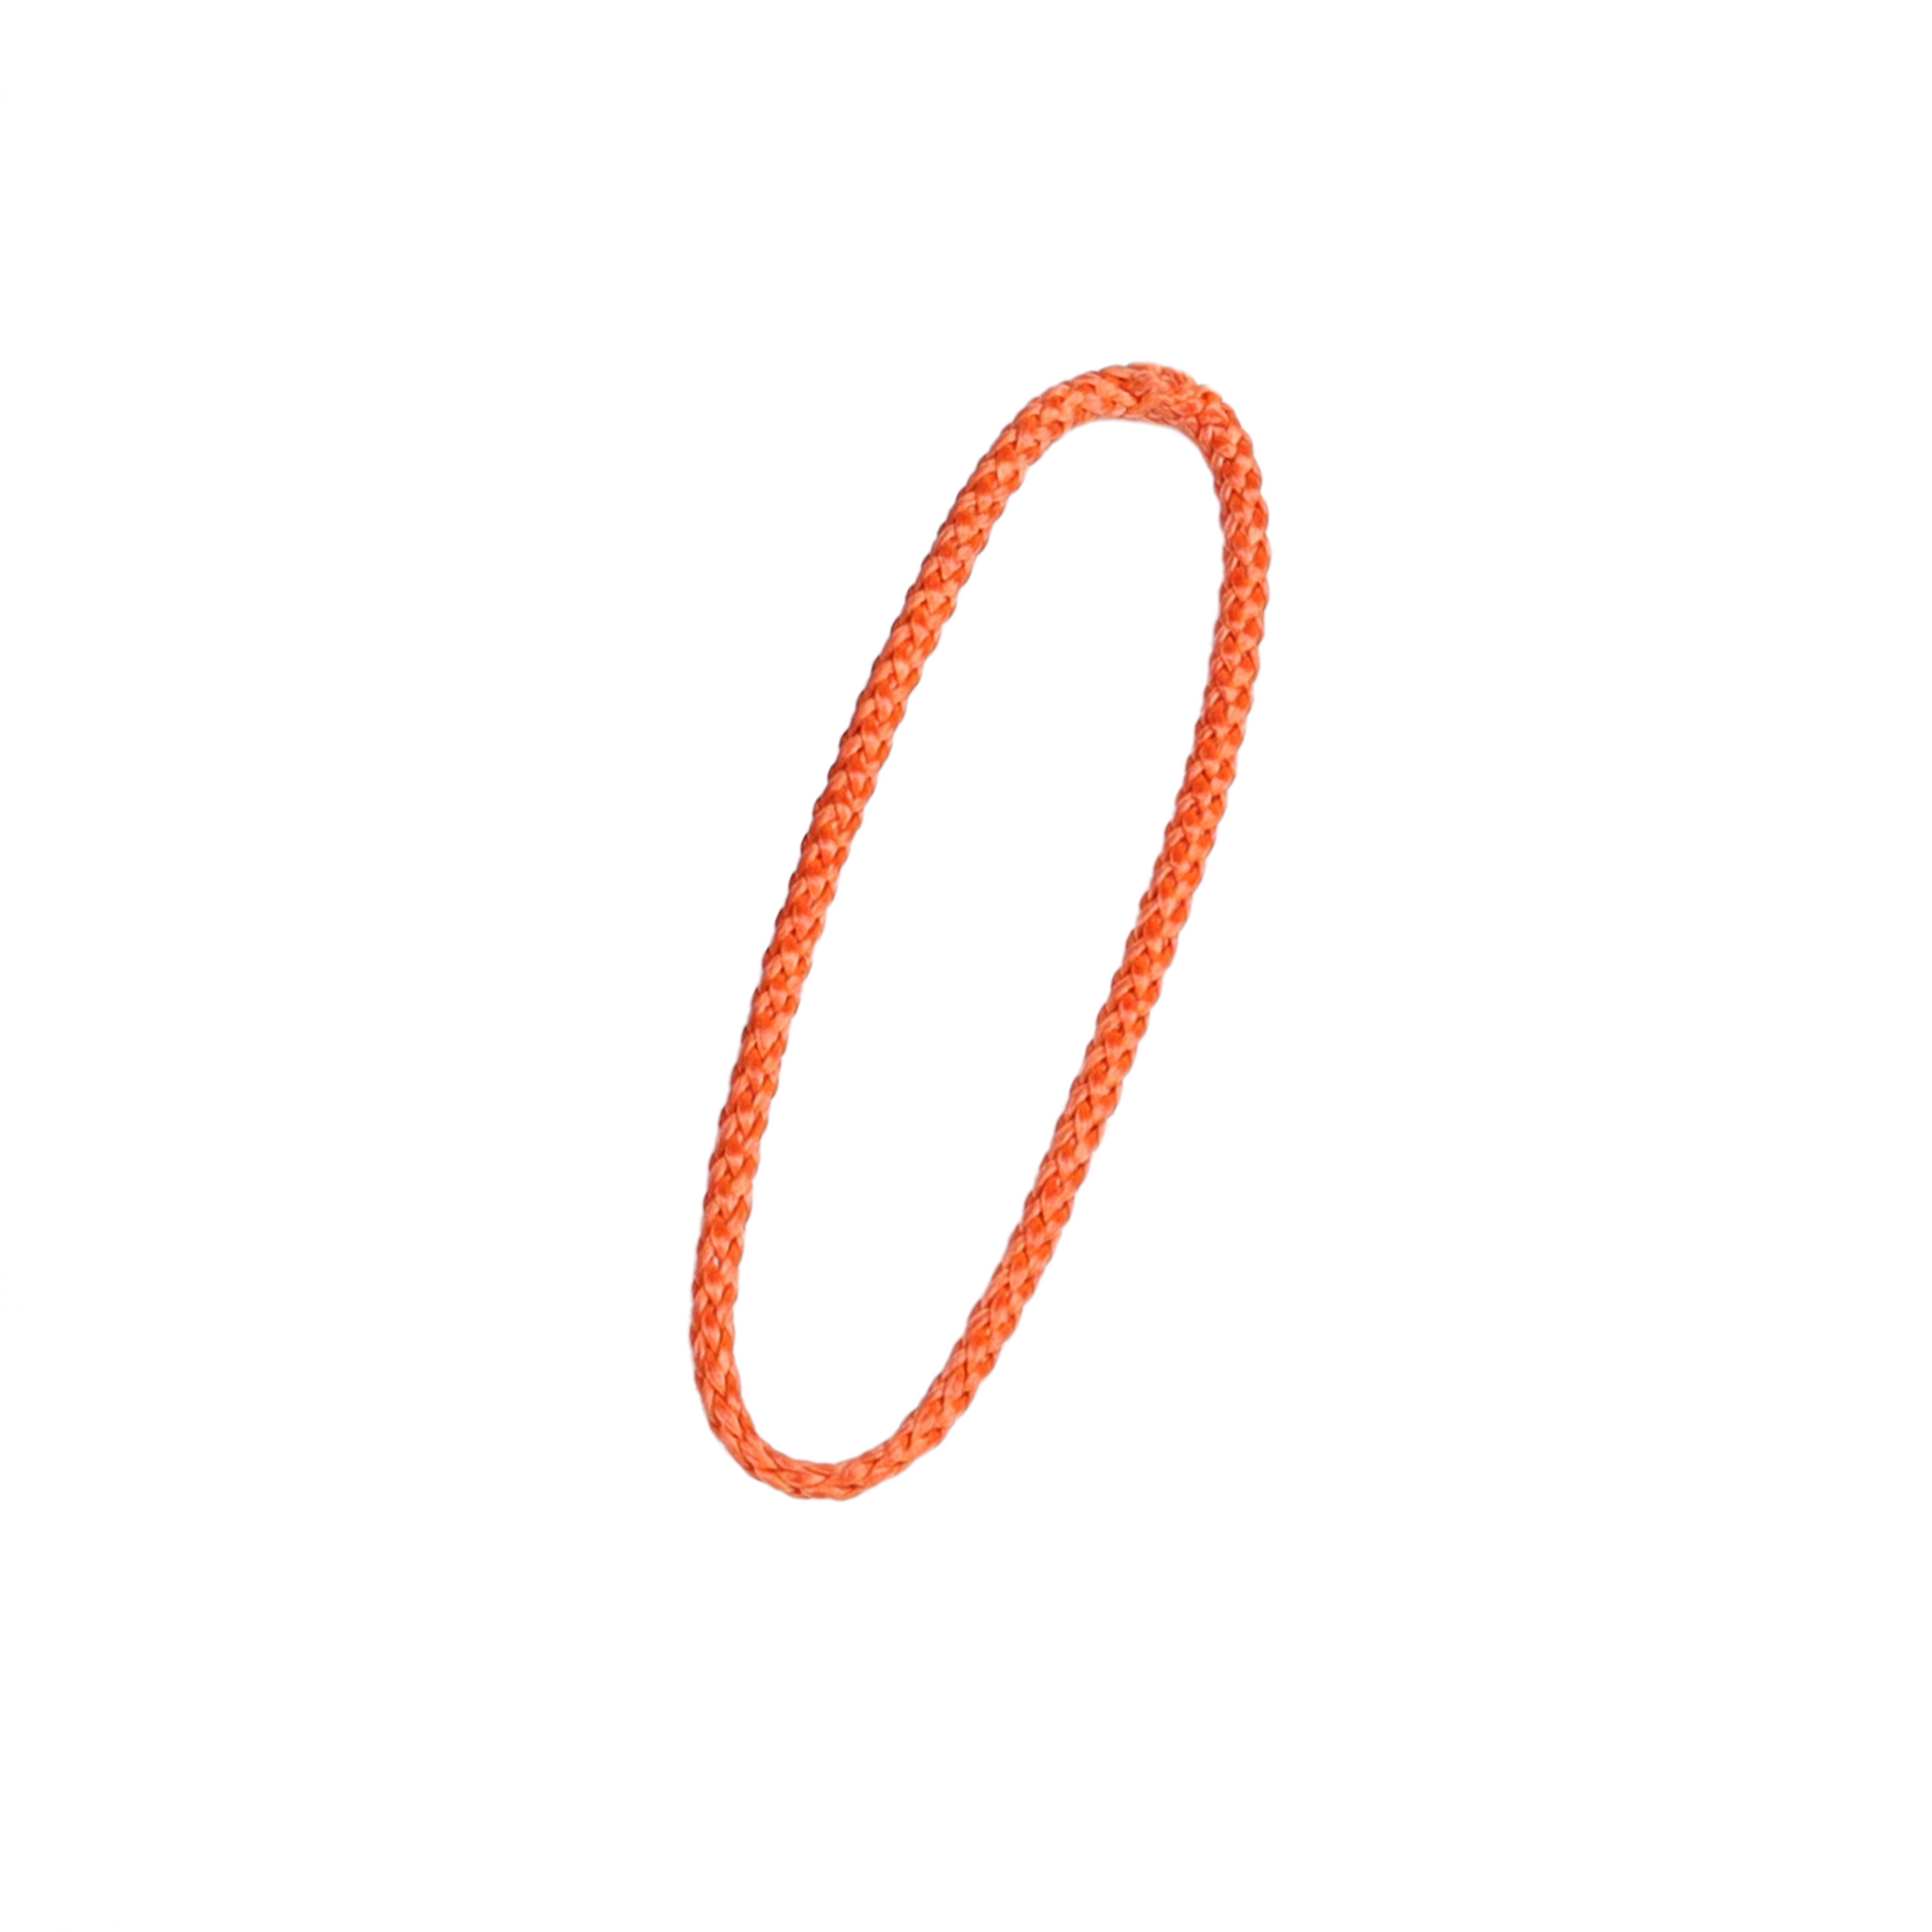 Amsteel Continuous Loop Orange